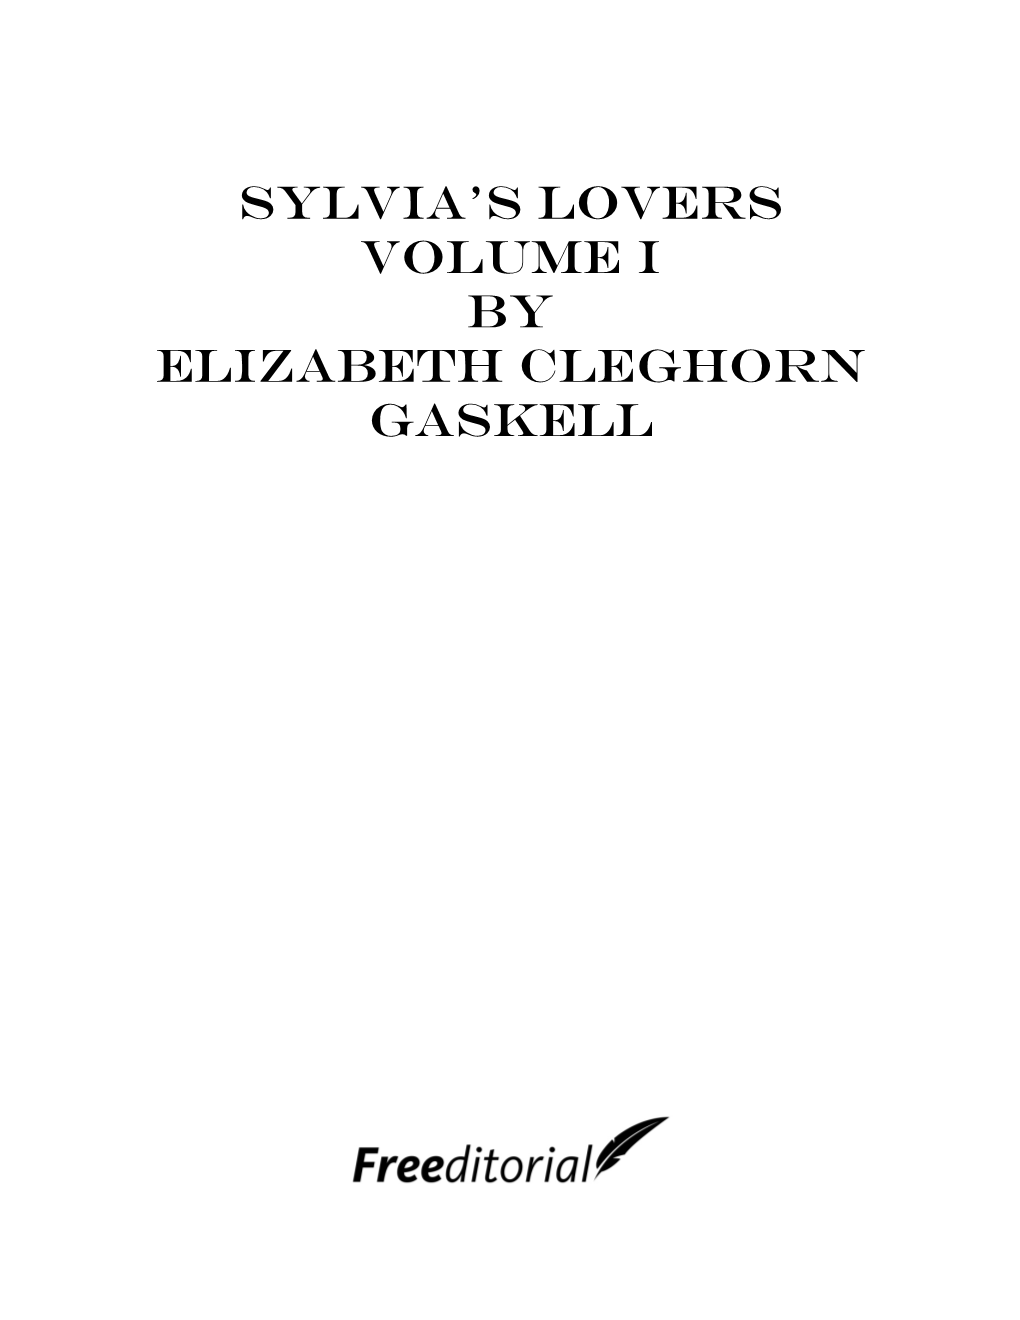 Sylvia's Lovers Volume I by Elizabeth Cleghorn Gaskell